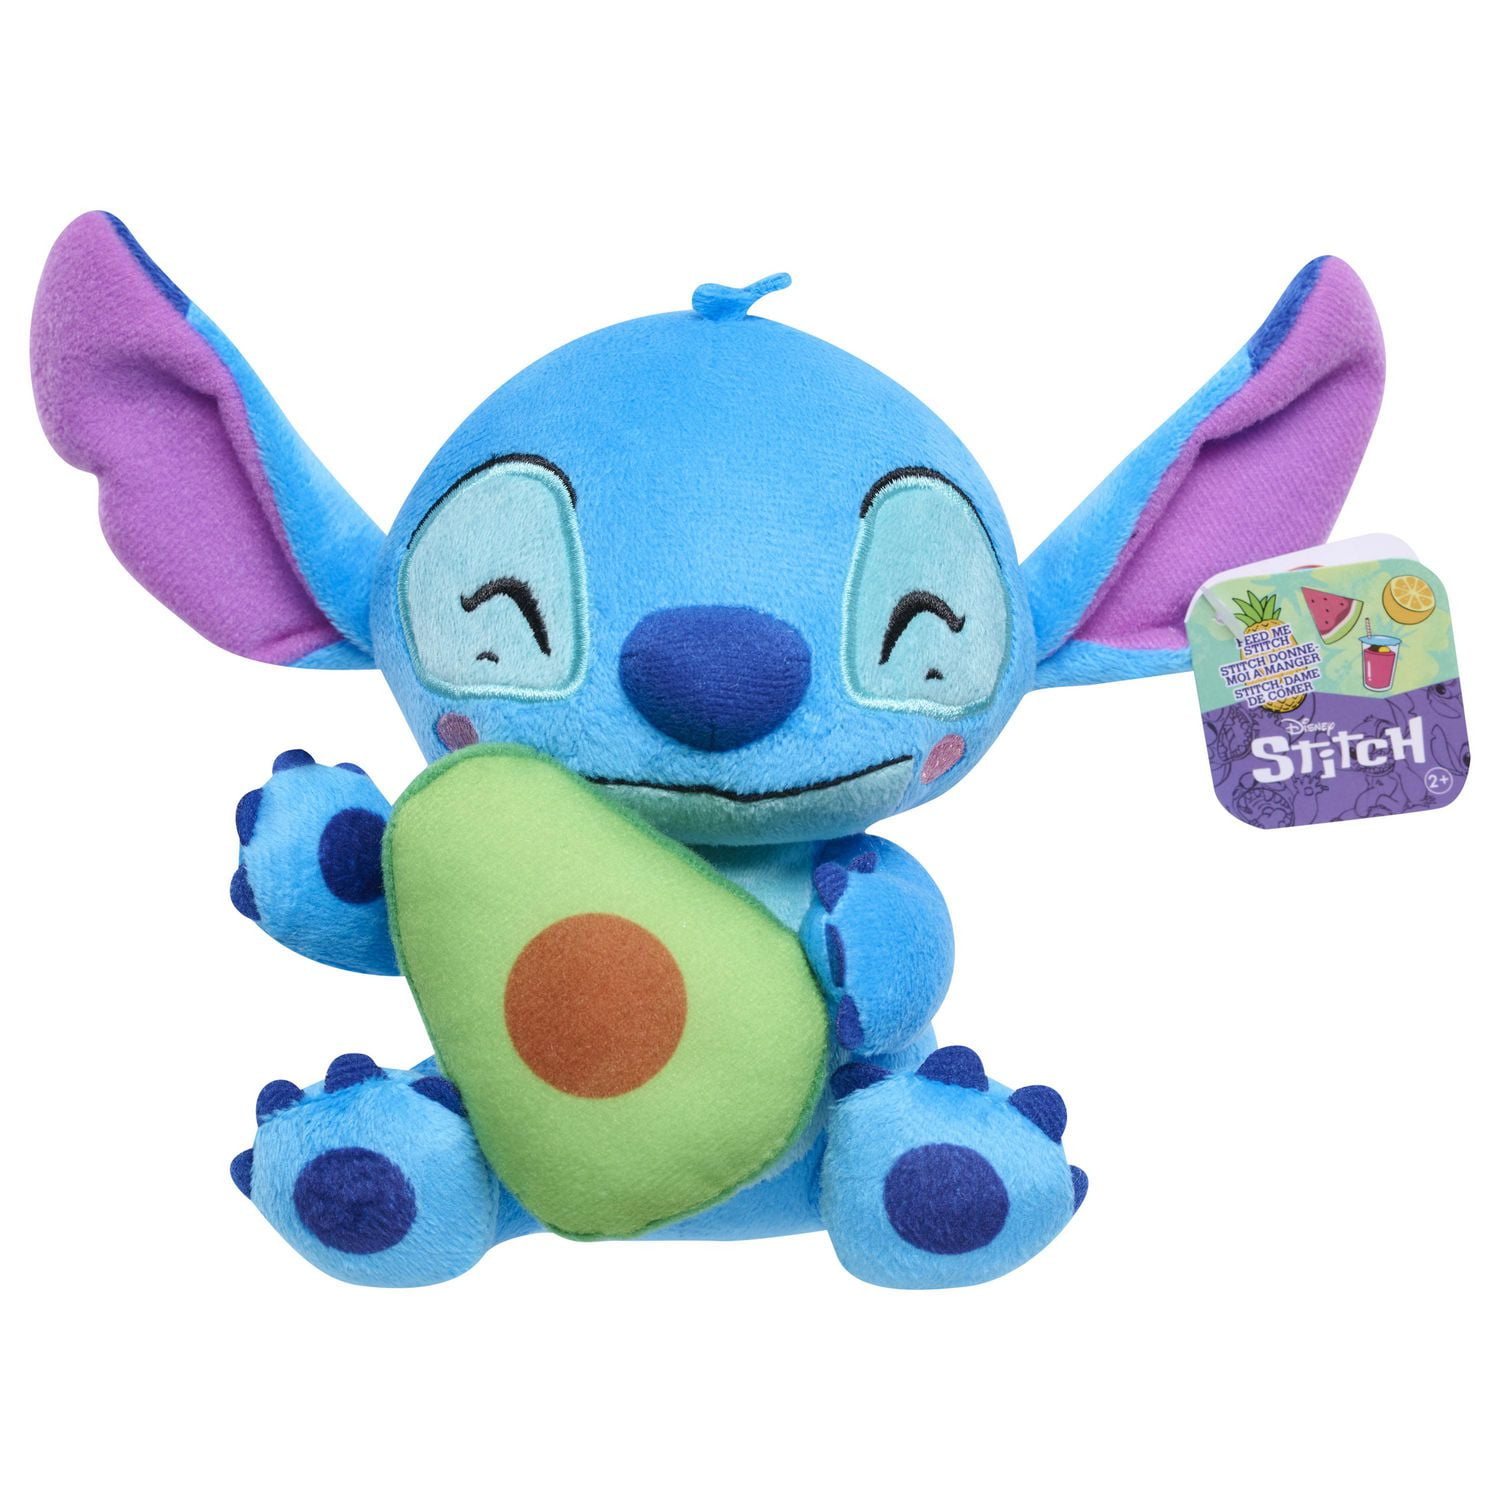 Disney Stitch Small 7-inch Plush Stuffed Animal, Stitch with Avocado 